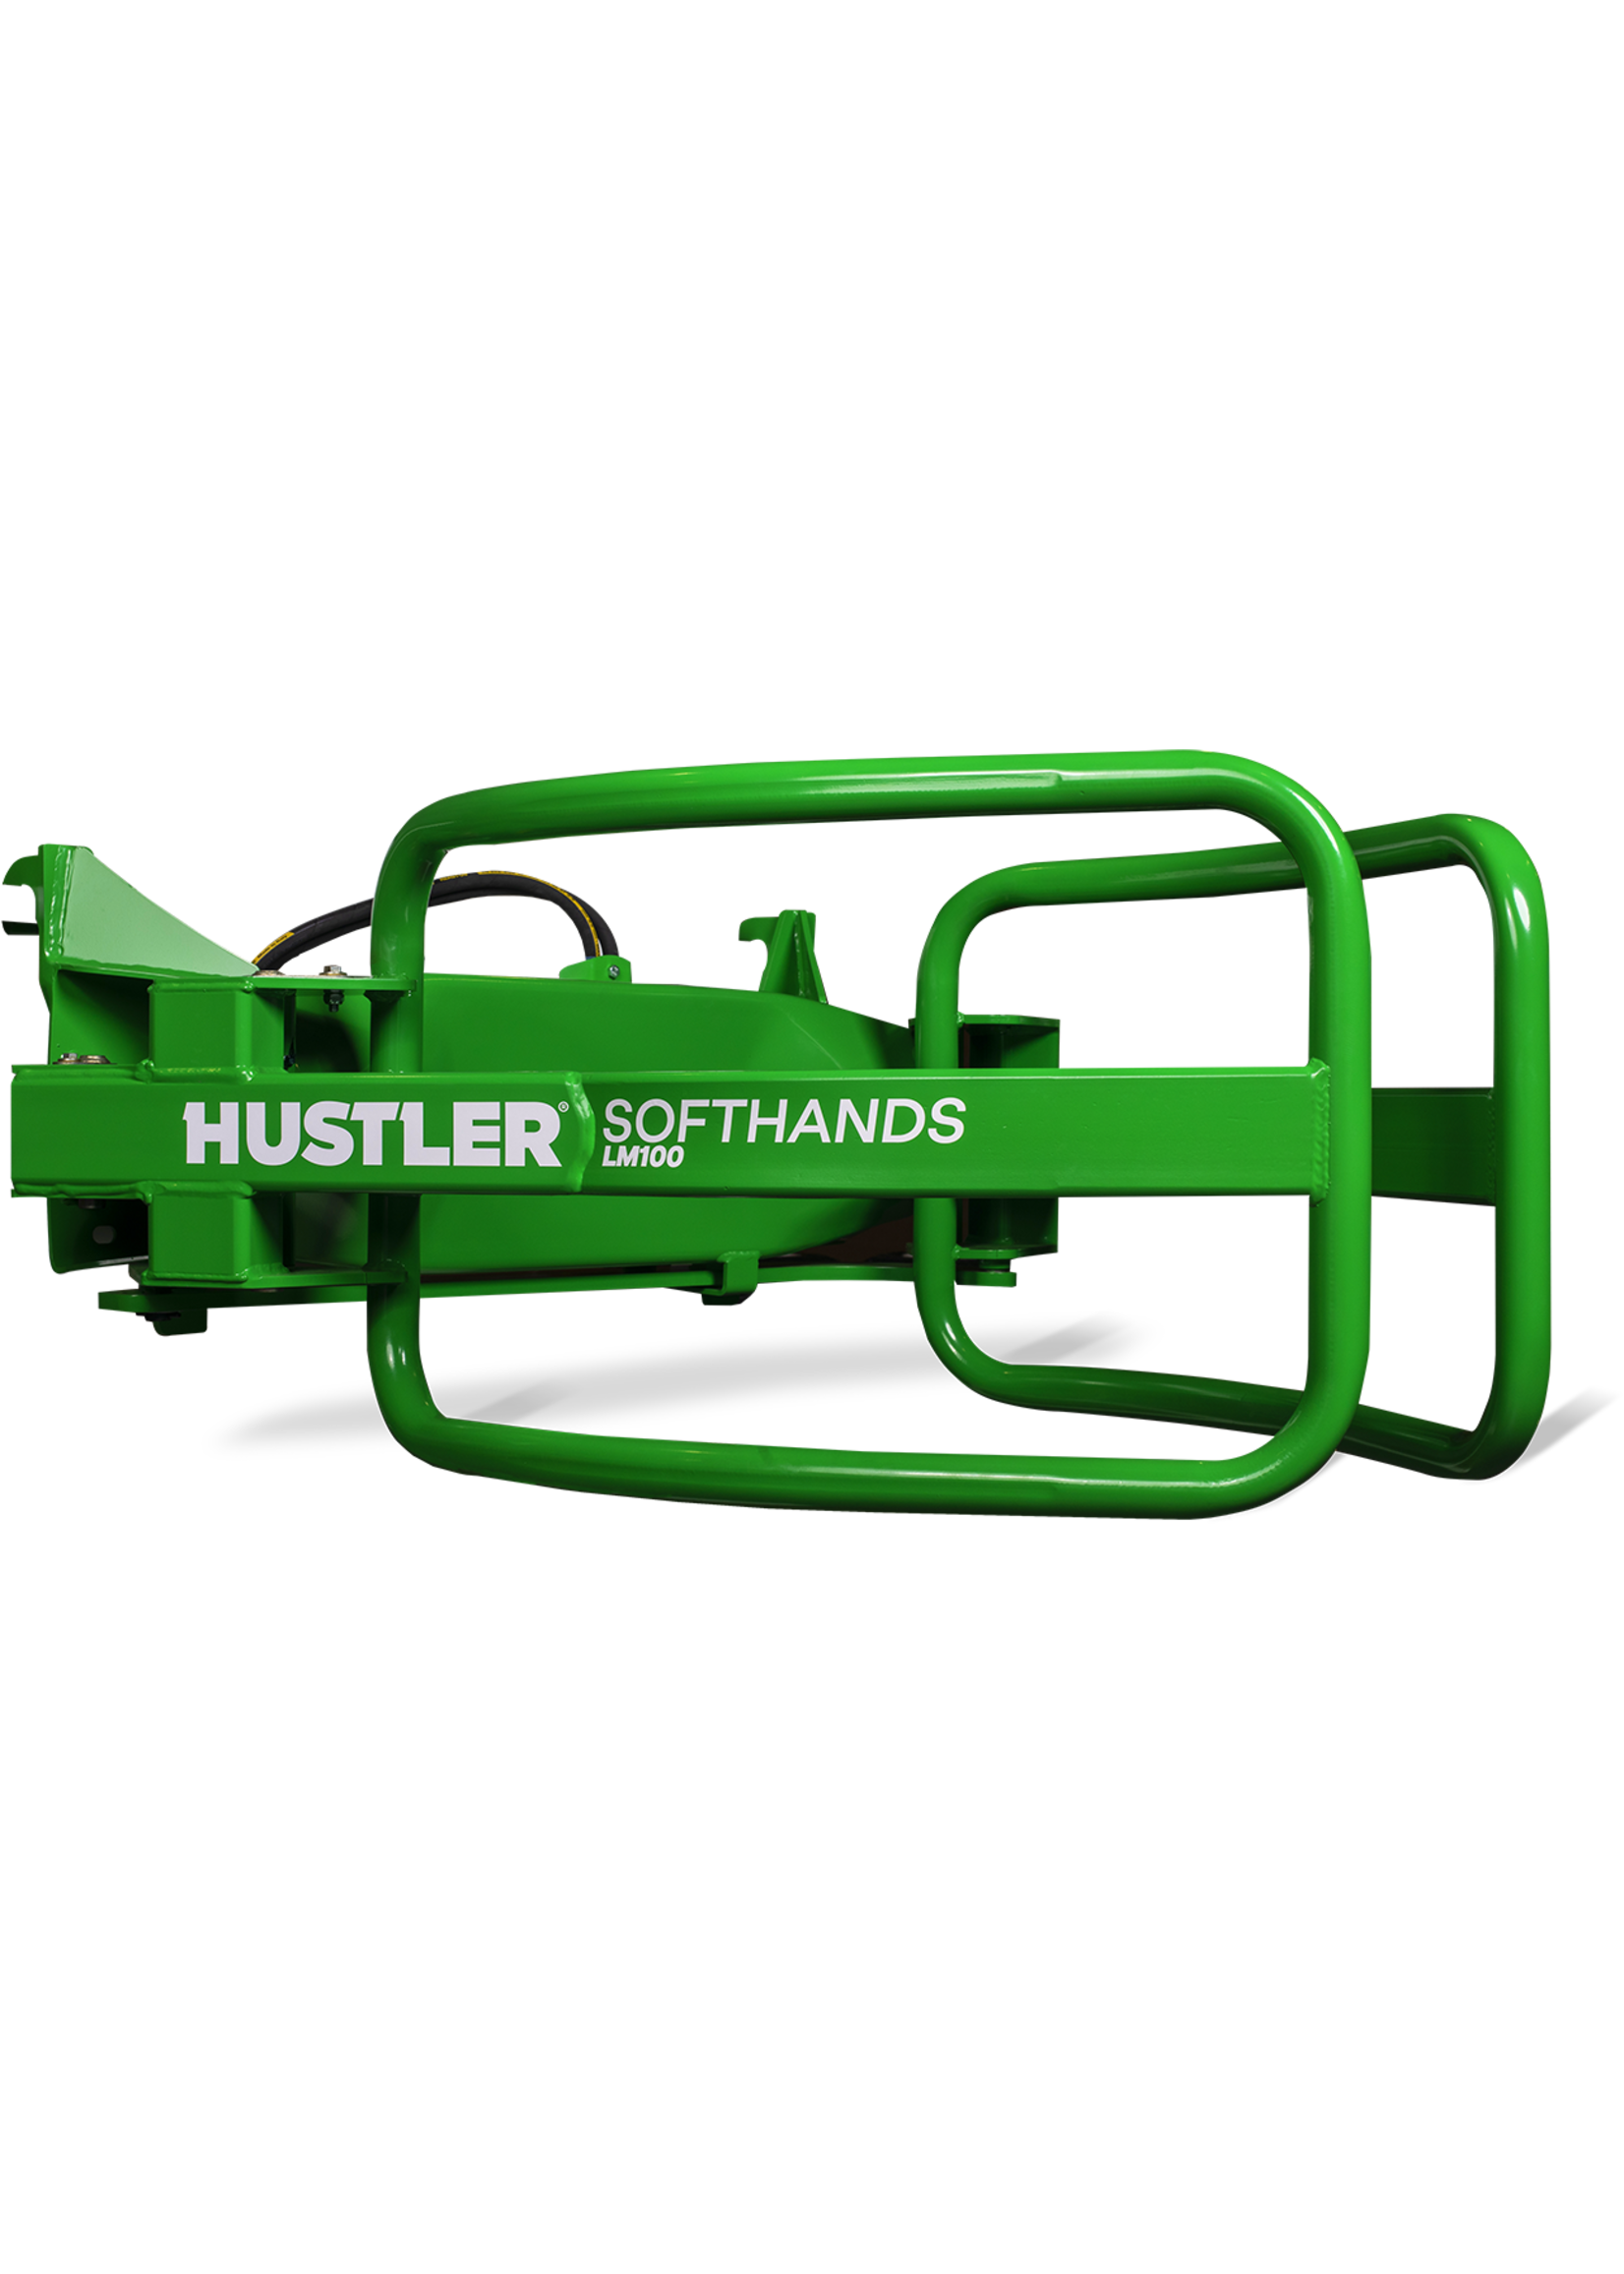 Hustler Softhands LM100 -